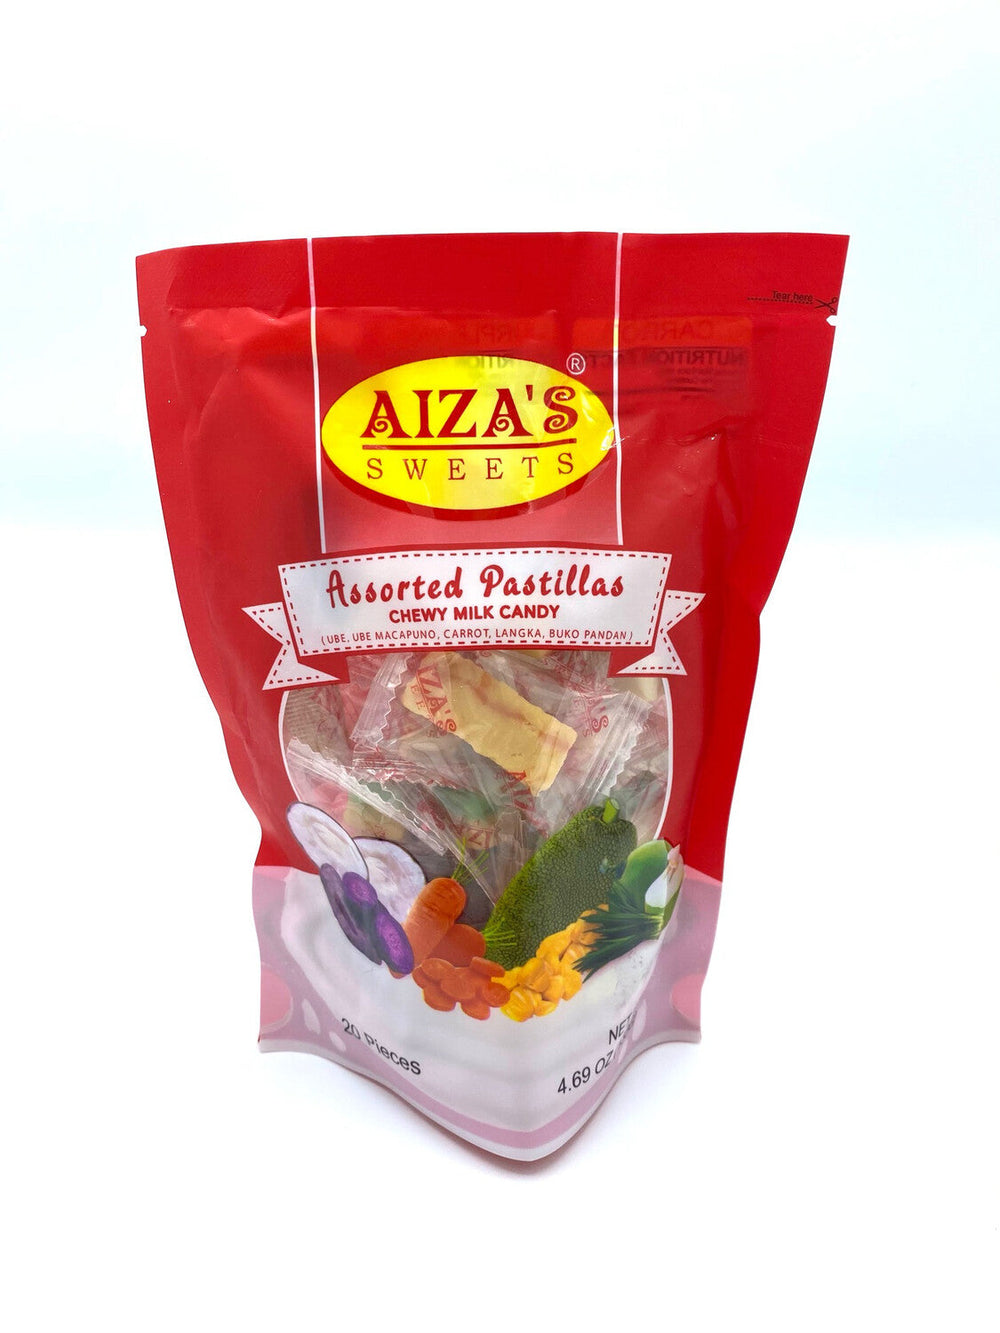 Aiza's Sweets Assorted Pastillas